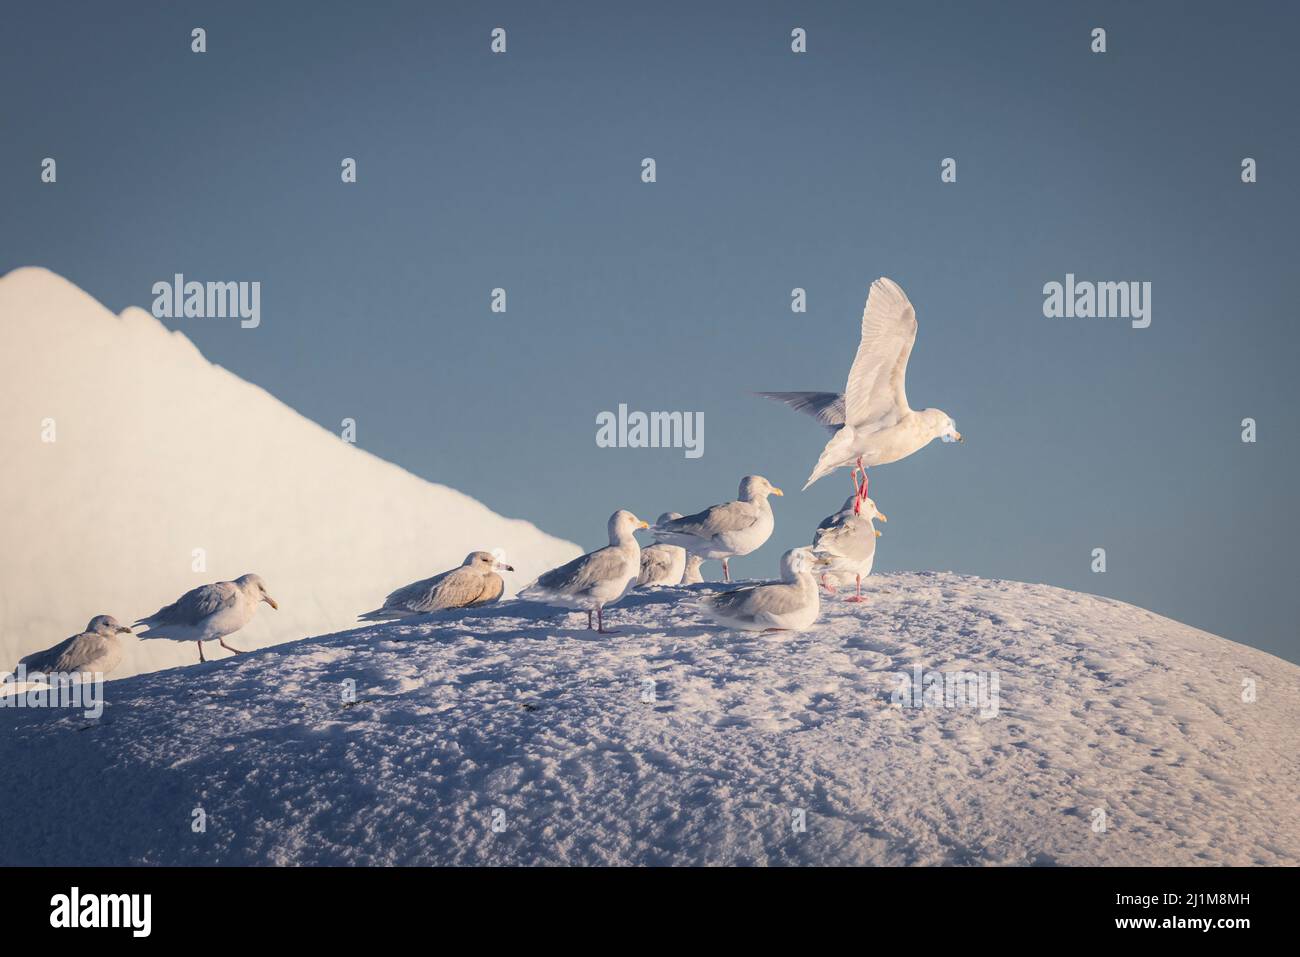 https://c8.alamy.com/comp/2J1M8MH/birds-over-big-block-of-ice-2J1M8MH.jpg